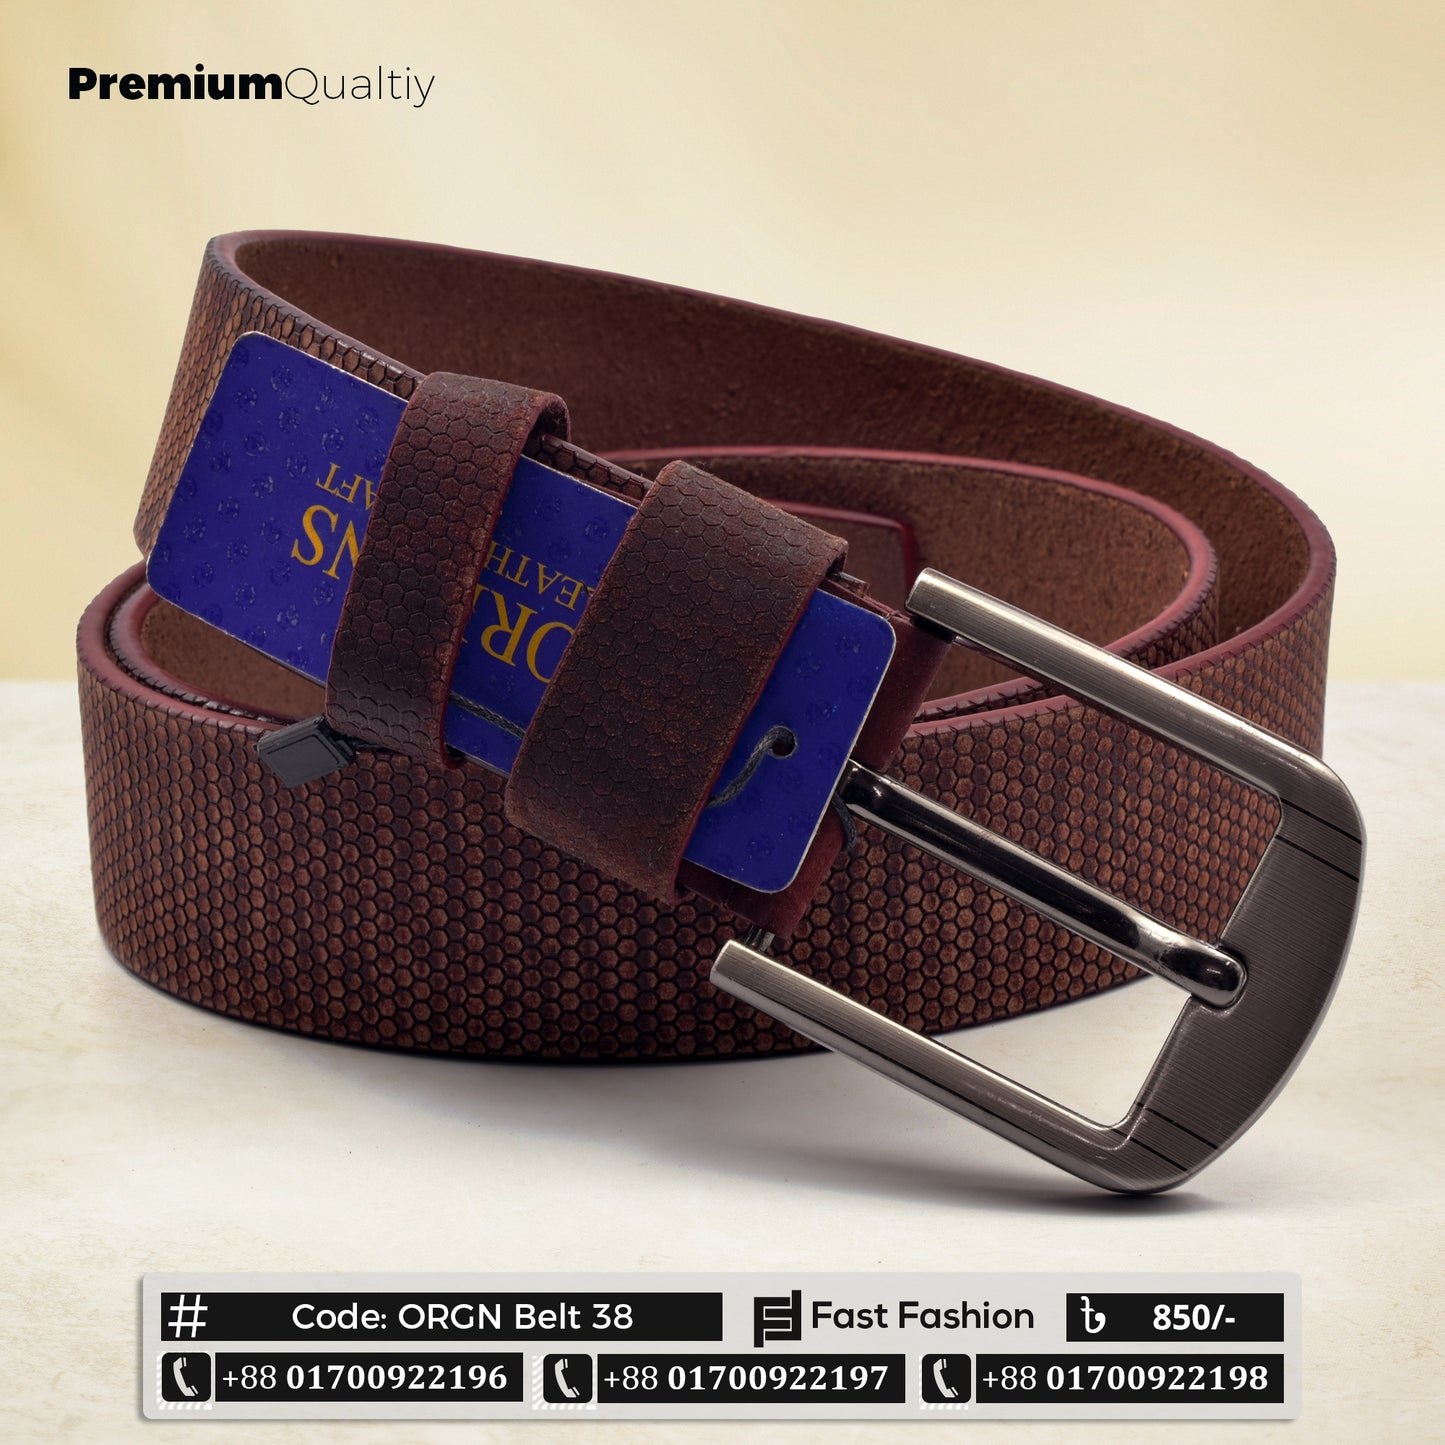 Stylish Premium Quality Original Leather Belt - ORGN Belt 38